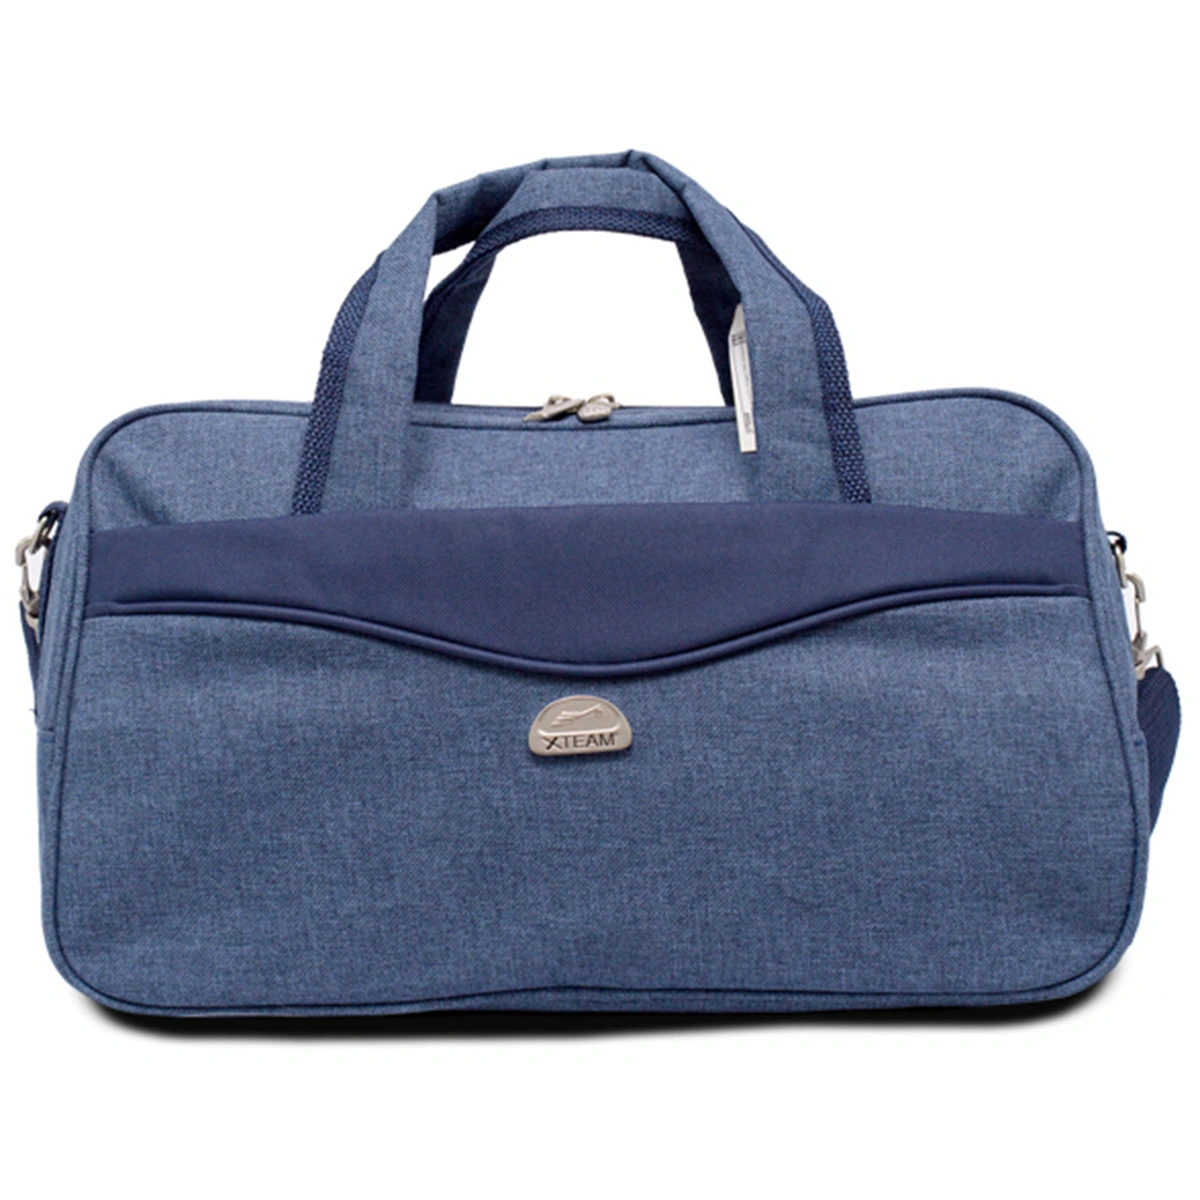 Дорожная сумка синий Хteam  С81.5 фото 3